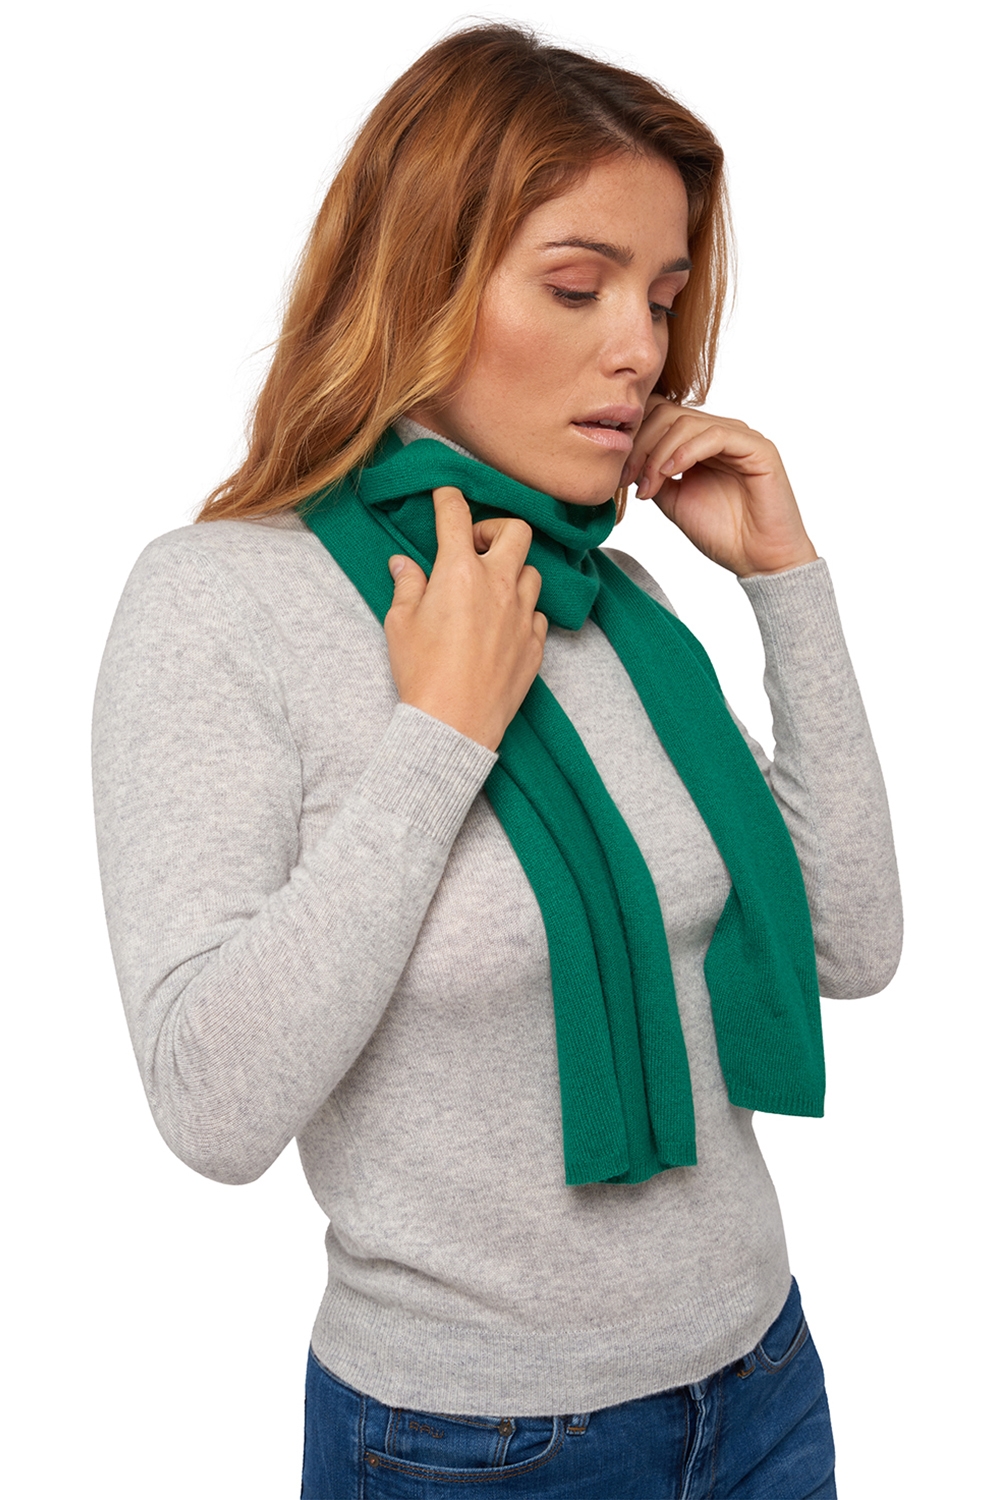 Cashmere ladies scarves mufflers ozone green grass 160 x 30 cm